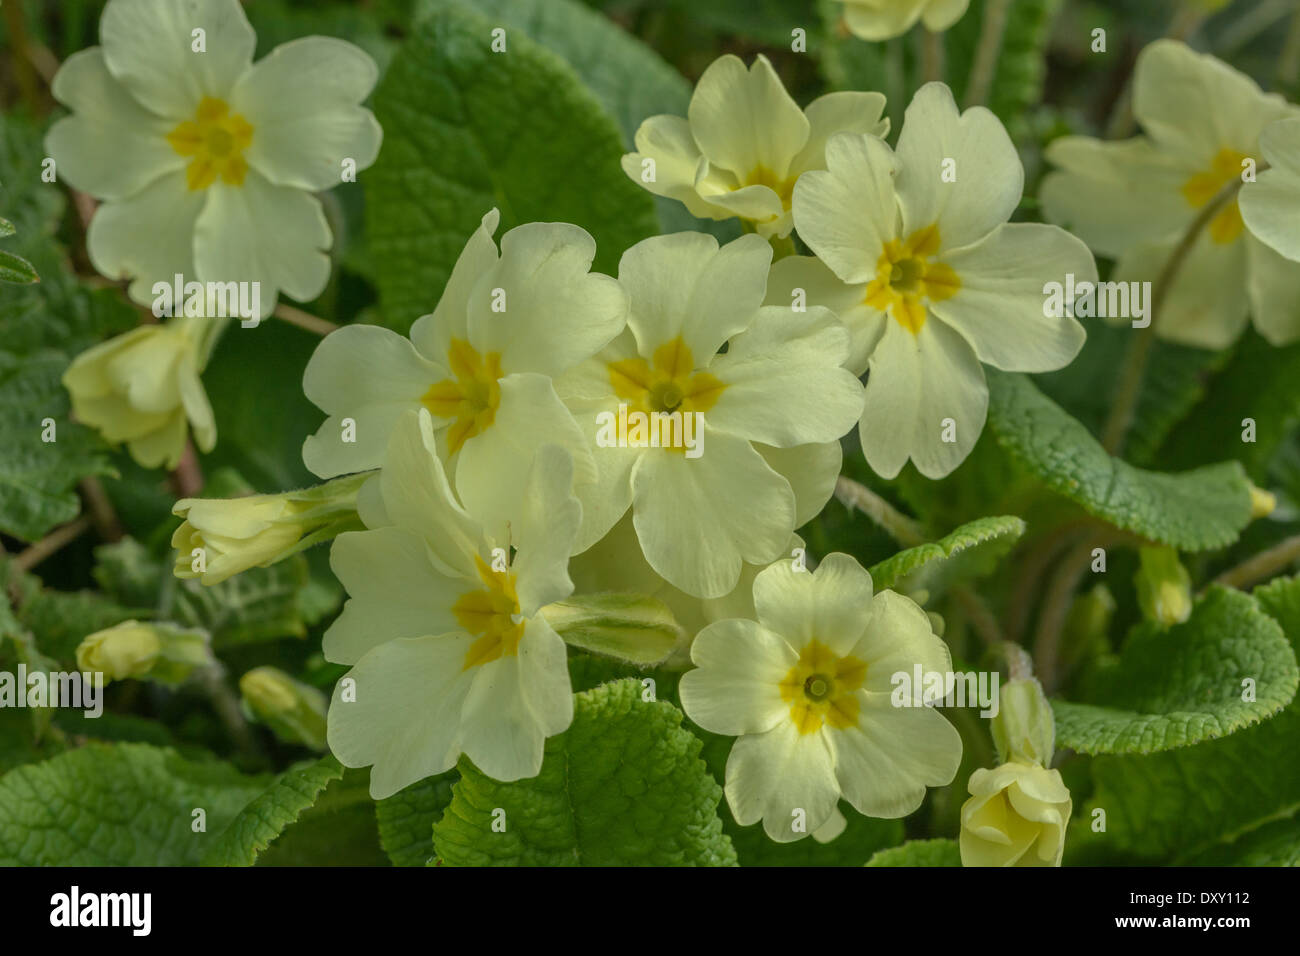 Close-up image of sulphur yellow flowers of the early springtime flower 'primrose' / Primula vulgaris. Wild primroses, primroses in the wild. Stock Photo